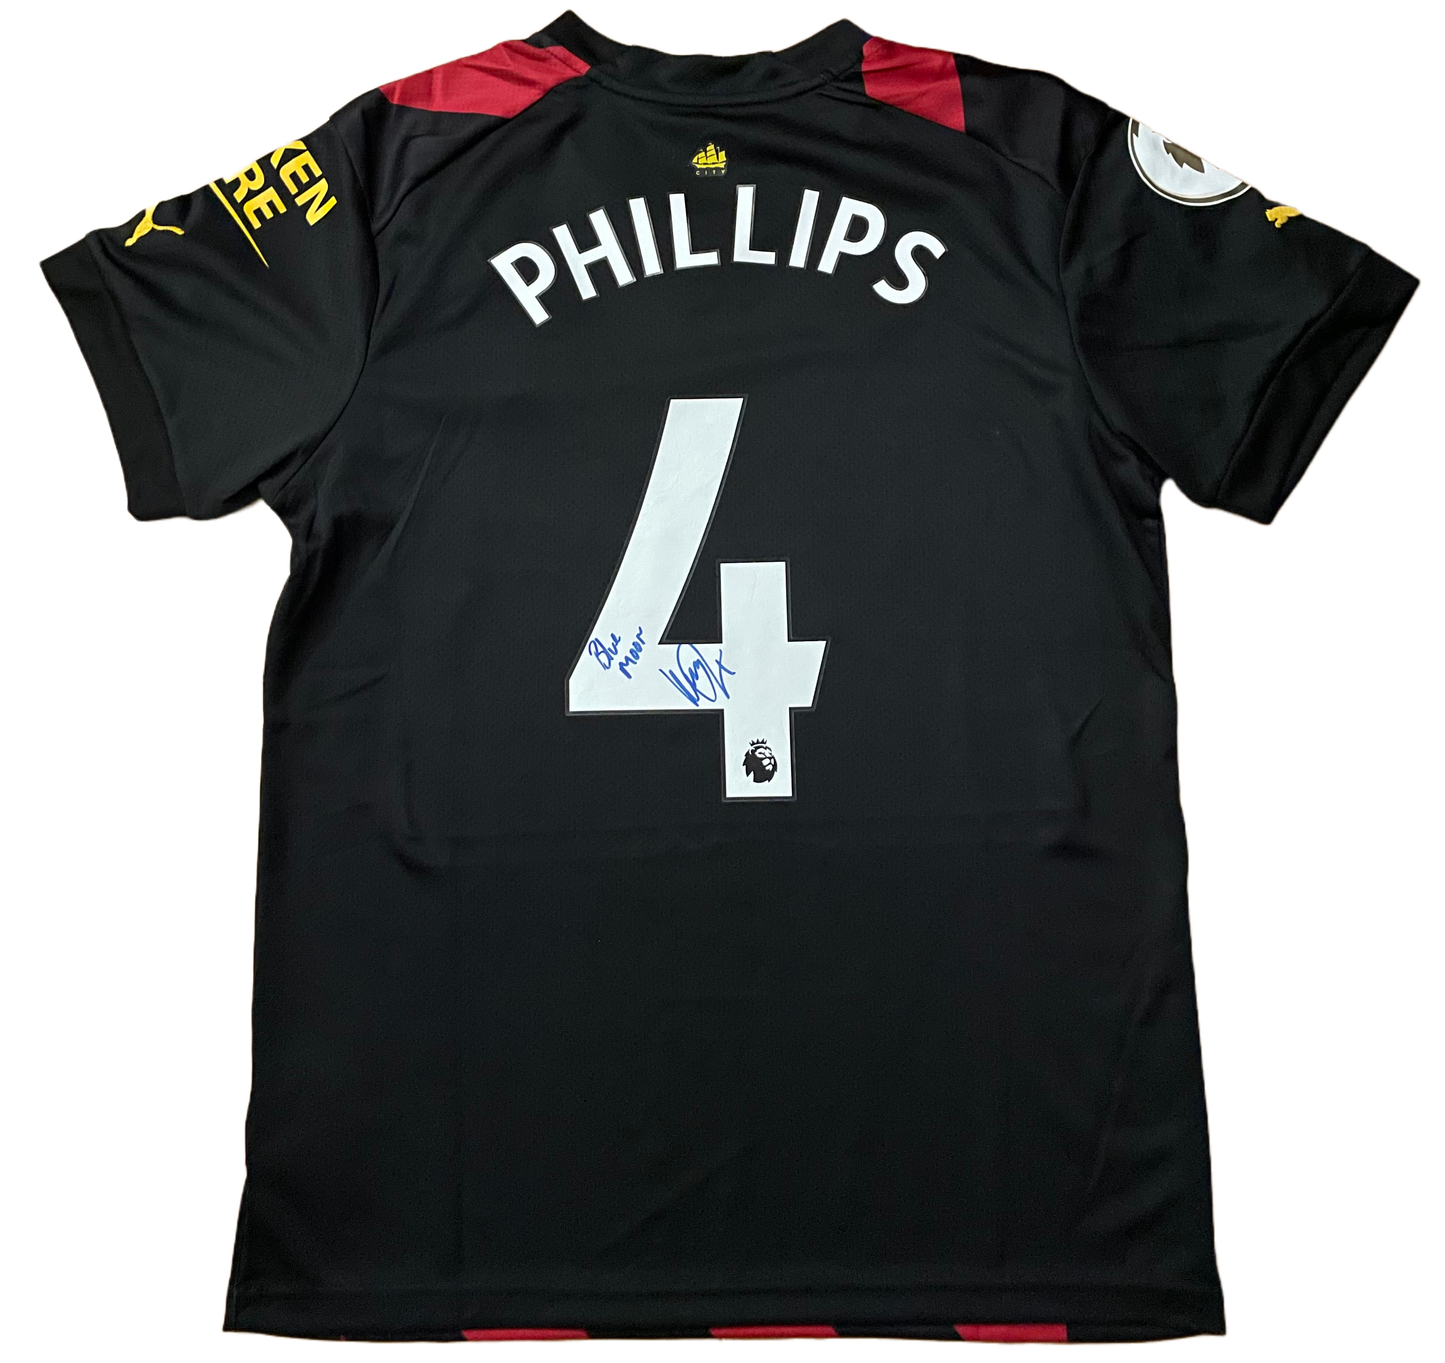 Signed Kalvin Phillips Manchester City Away Shirt 22/23 (Blue Moon Inscription)